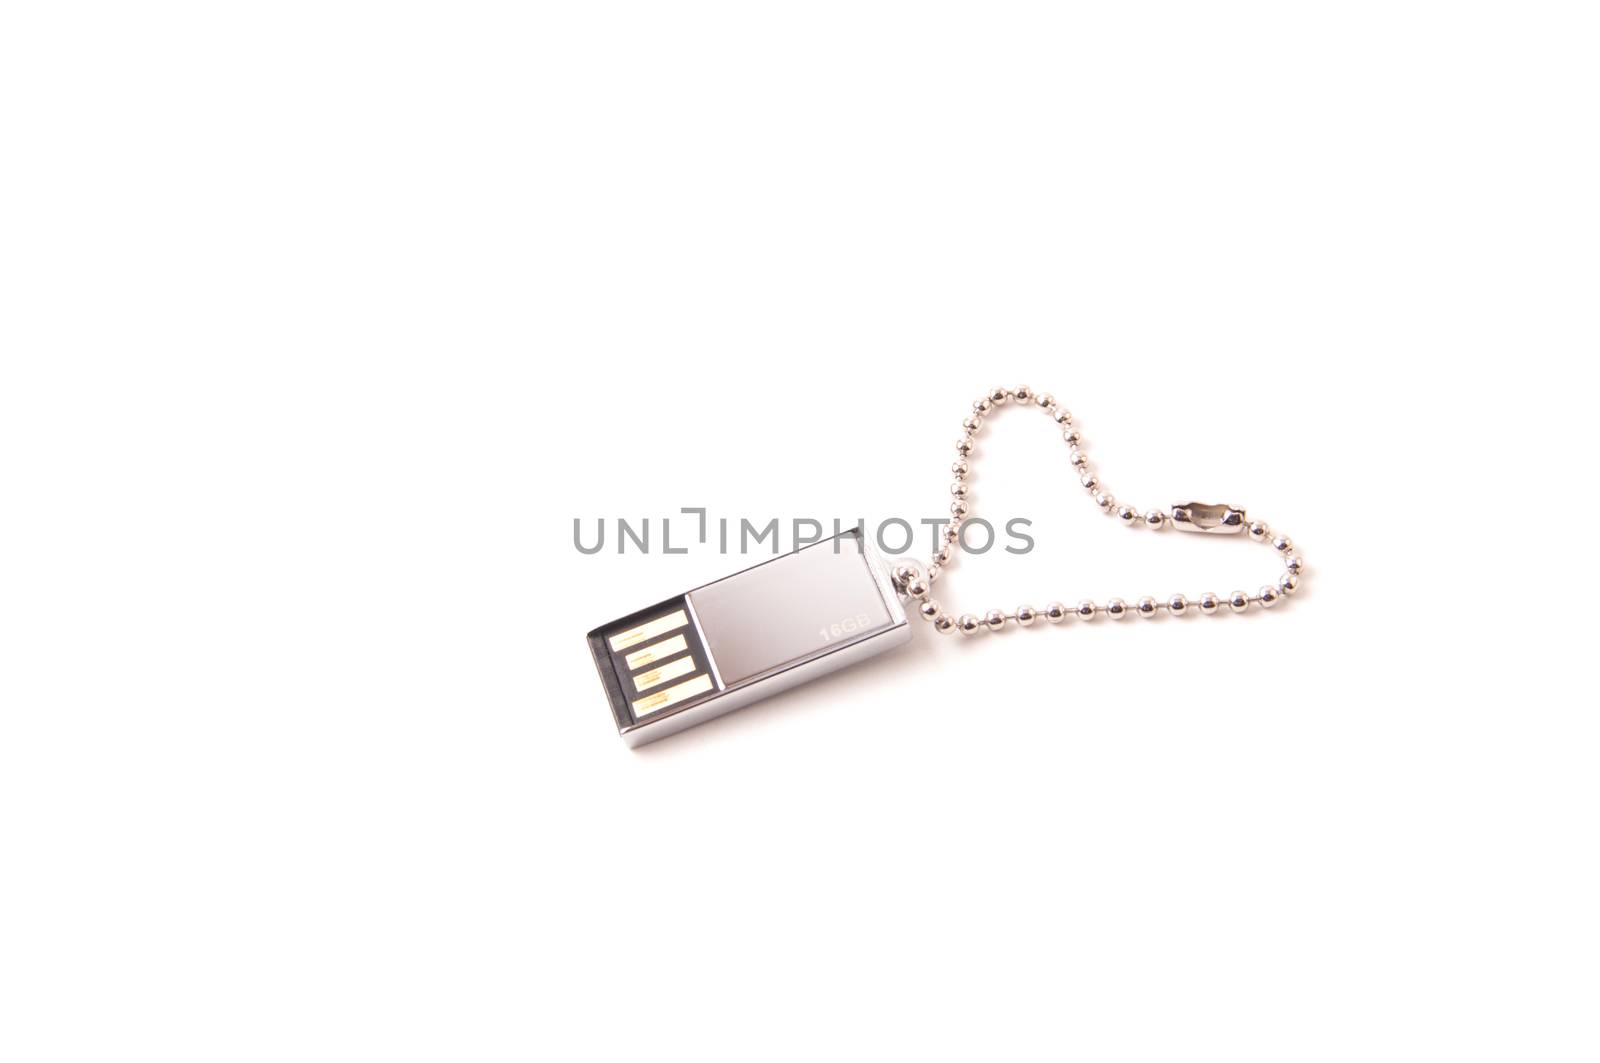 Platinum USB key with heart shape chain